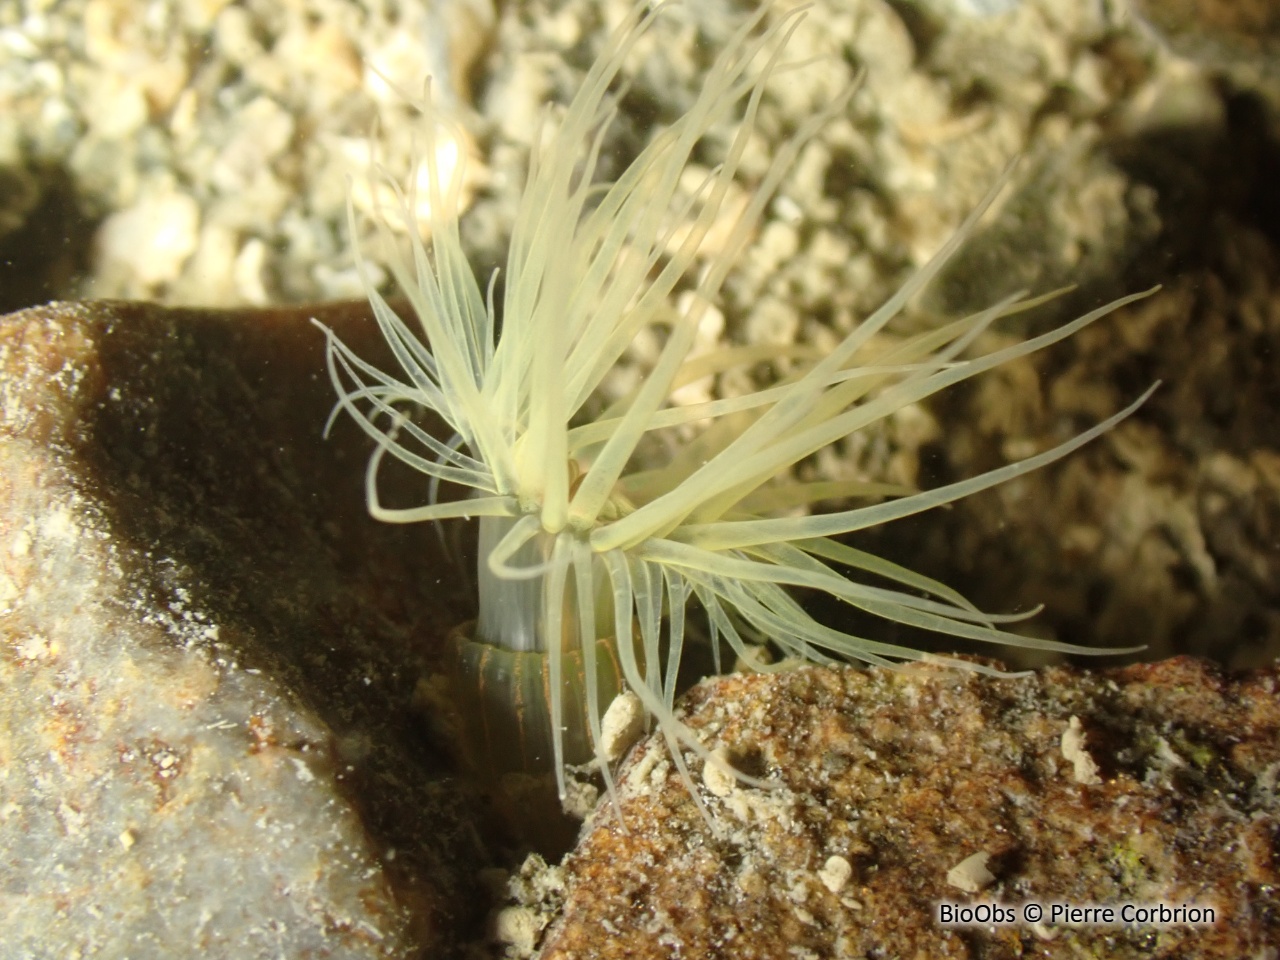 Anémone asiatique lignée - Diadumene lineata - Pierre Corbrion - BioObs